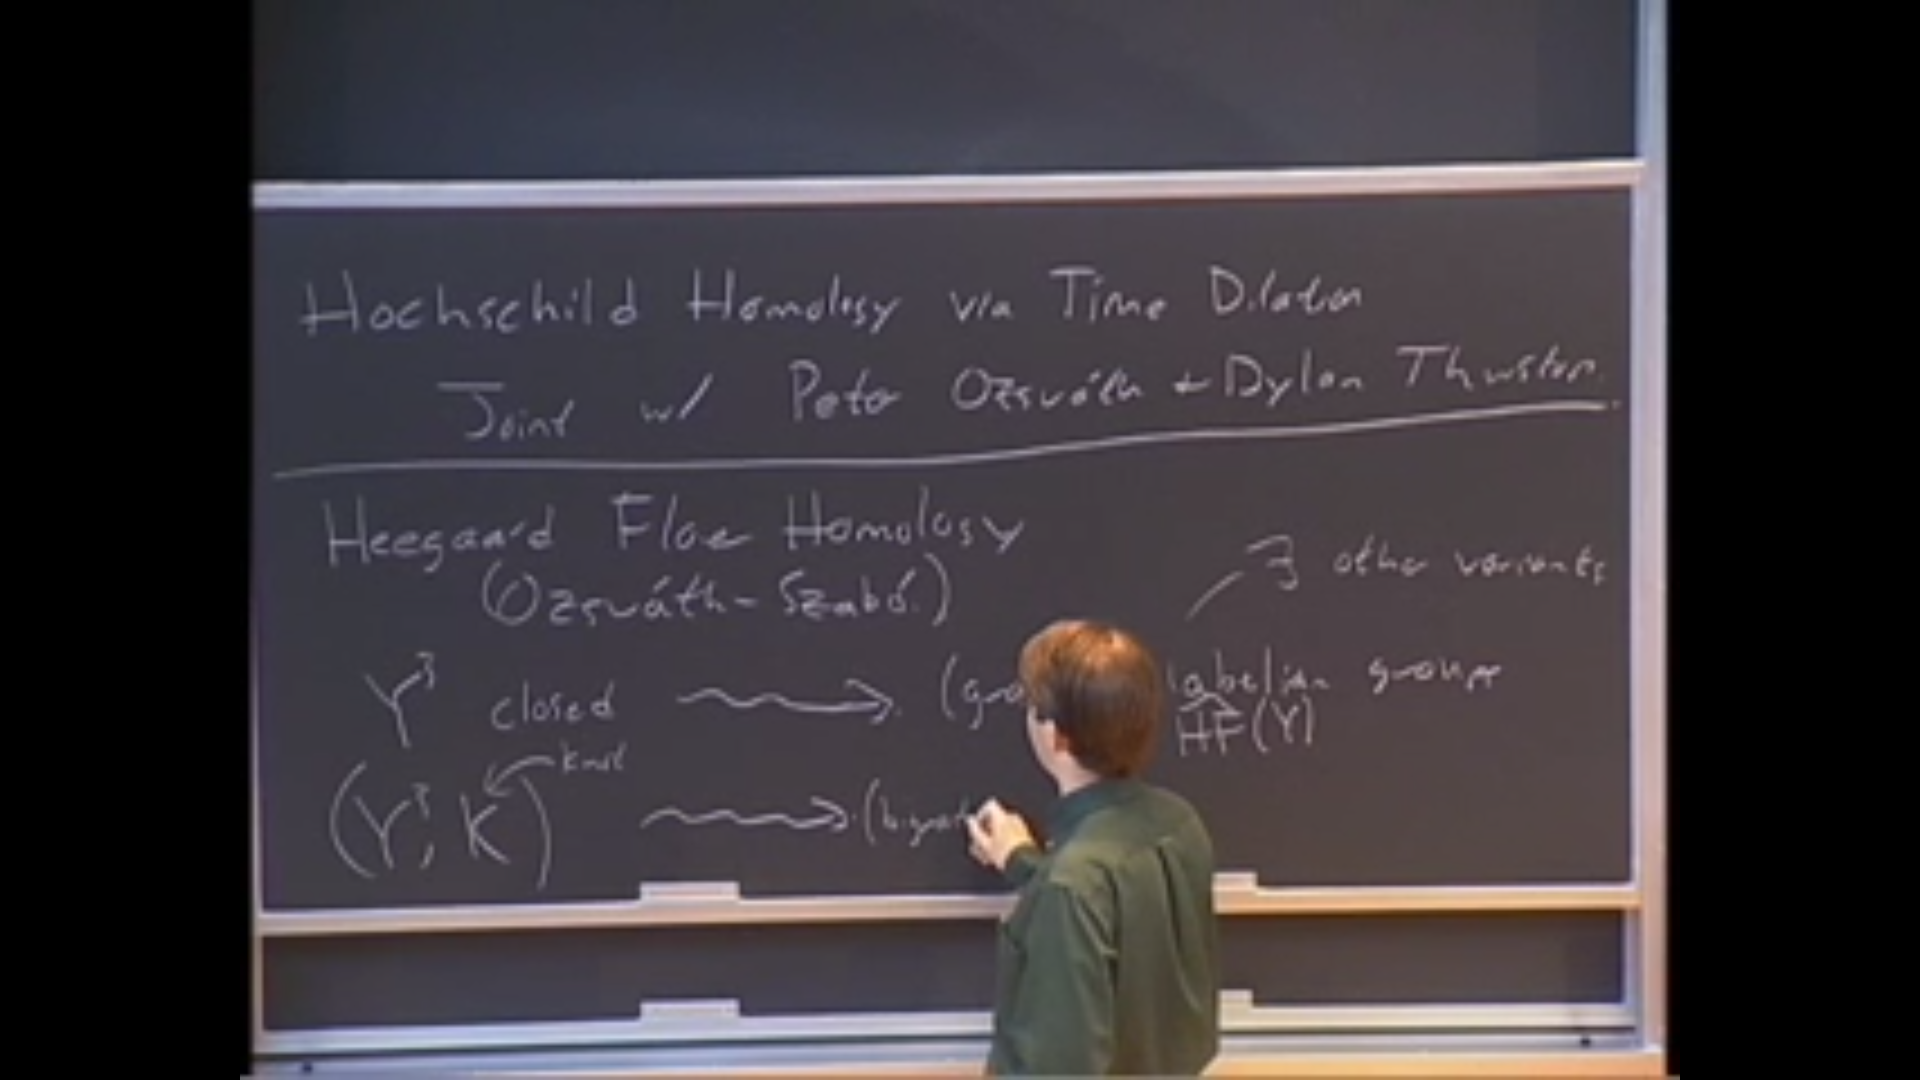 Hochschild homology via time dilation Thumbnail